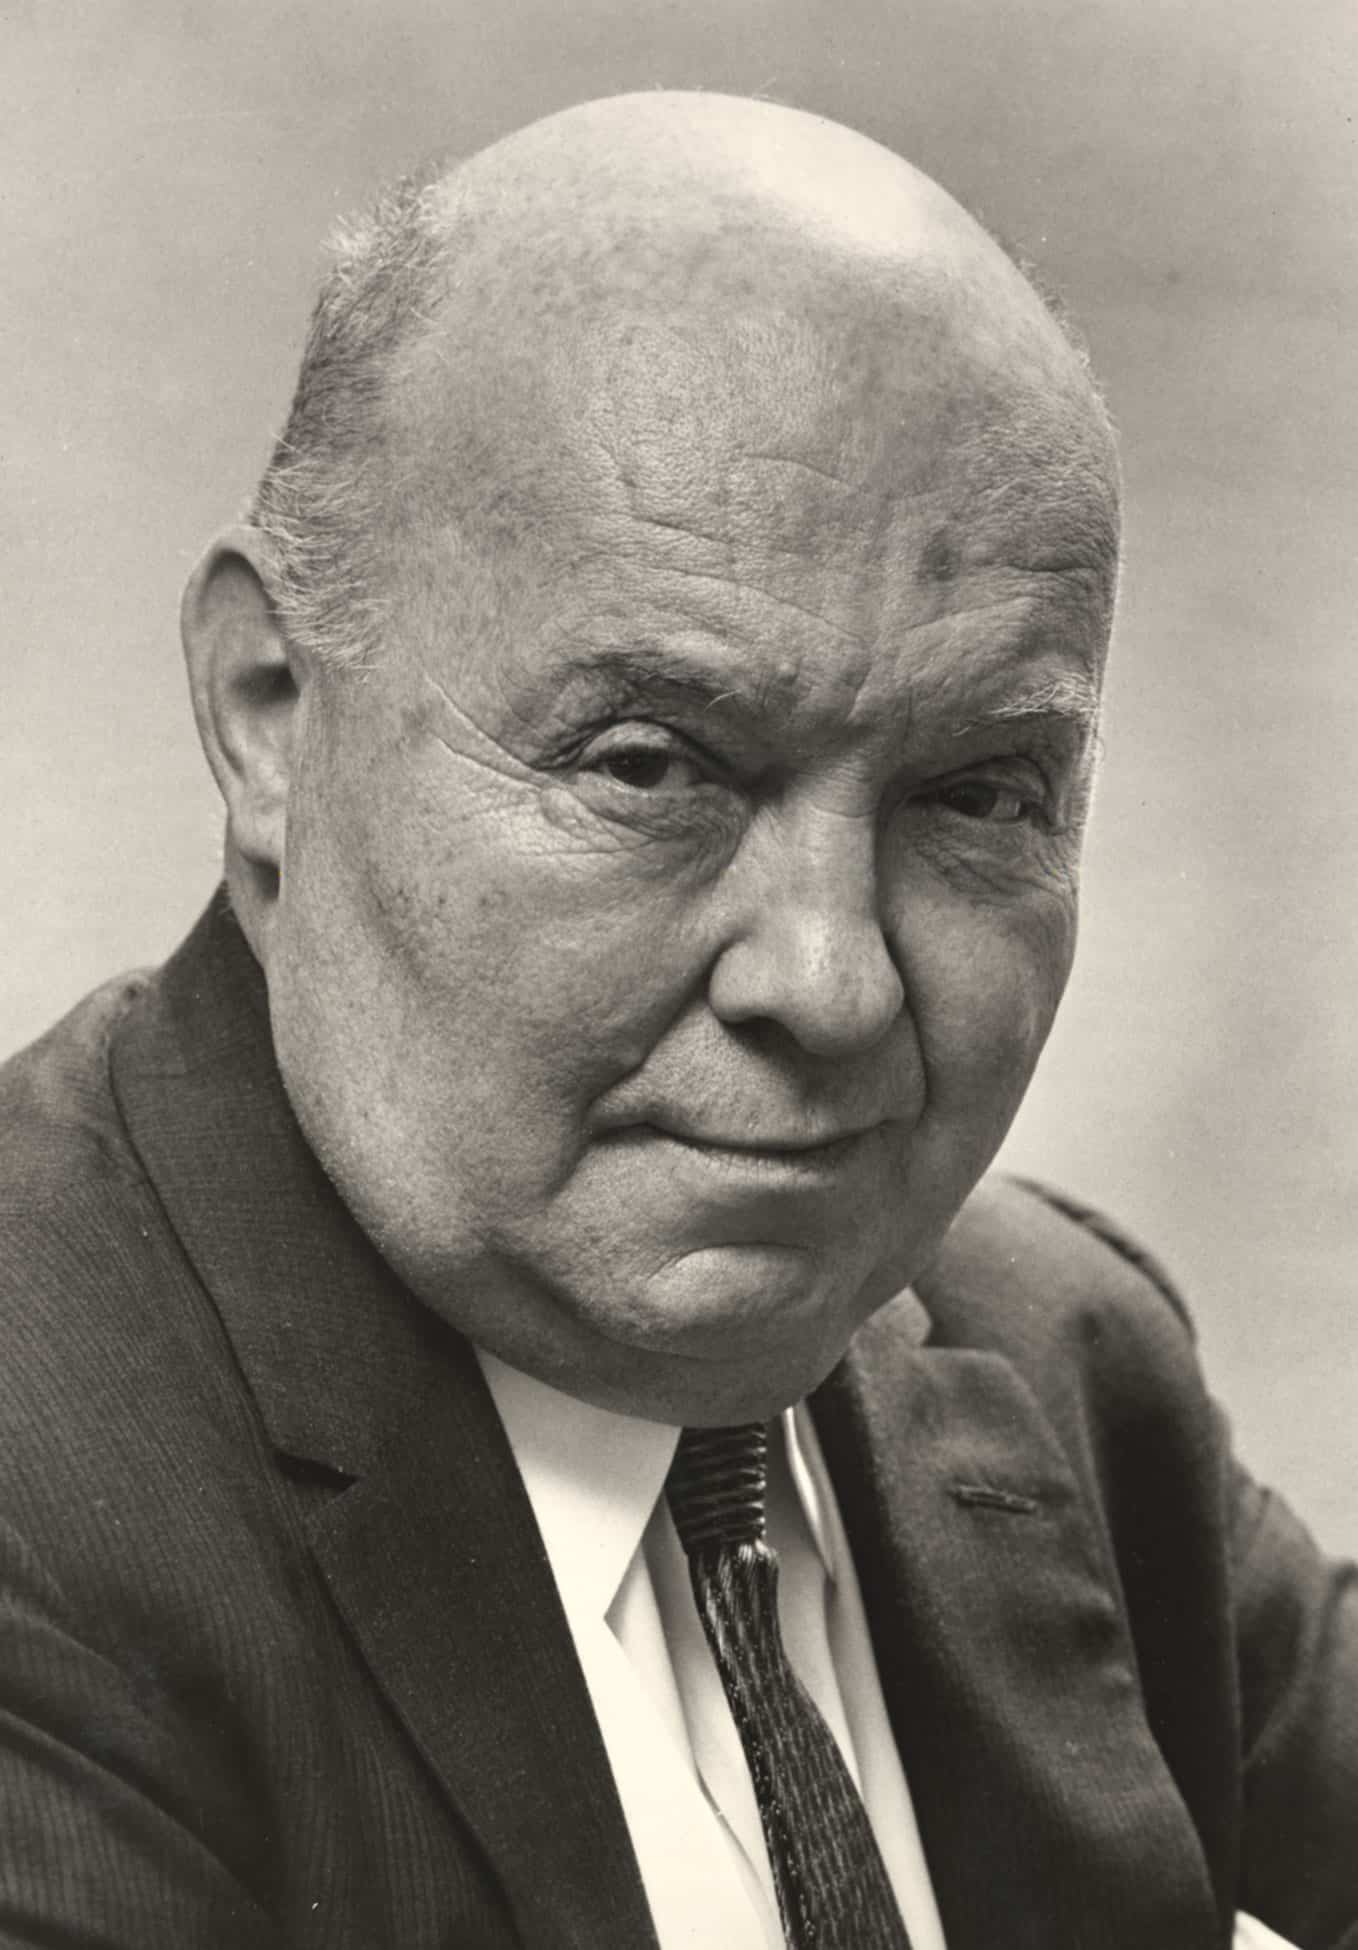 William Mueser, past MRCE partner who designed many NYC excavations and bridge foundations across North America